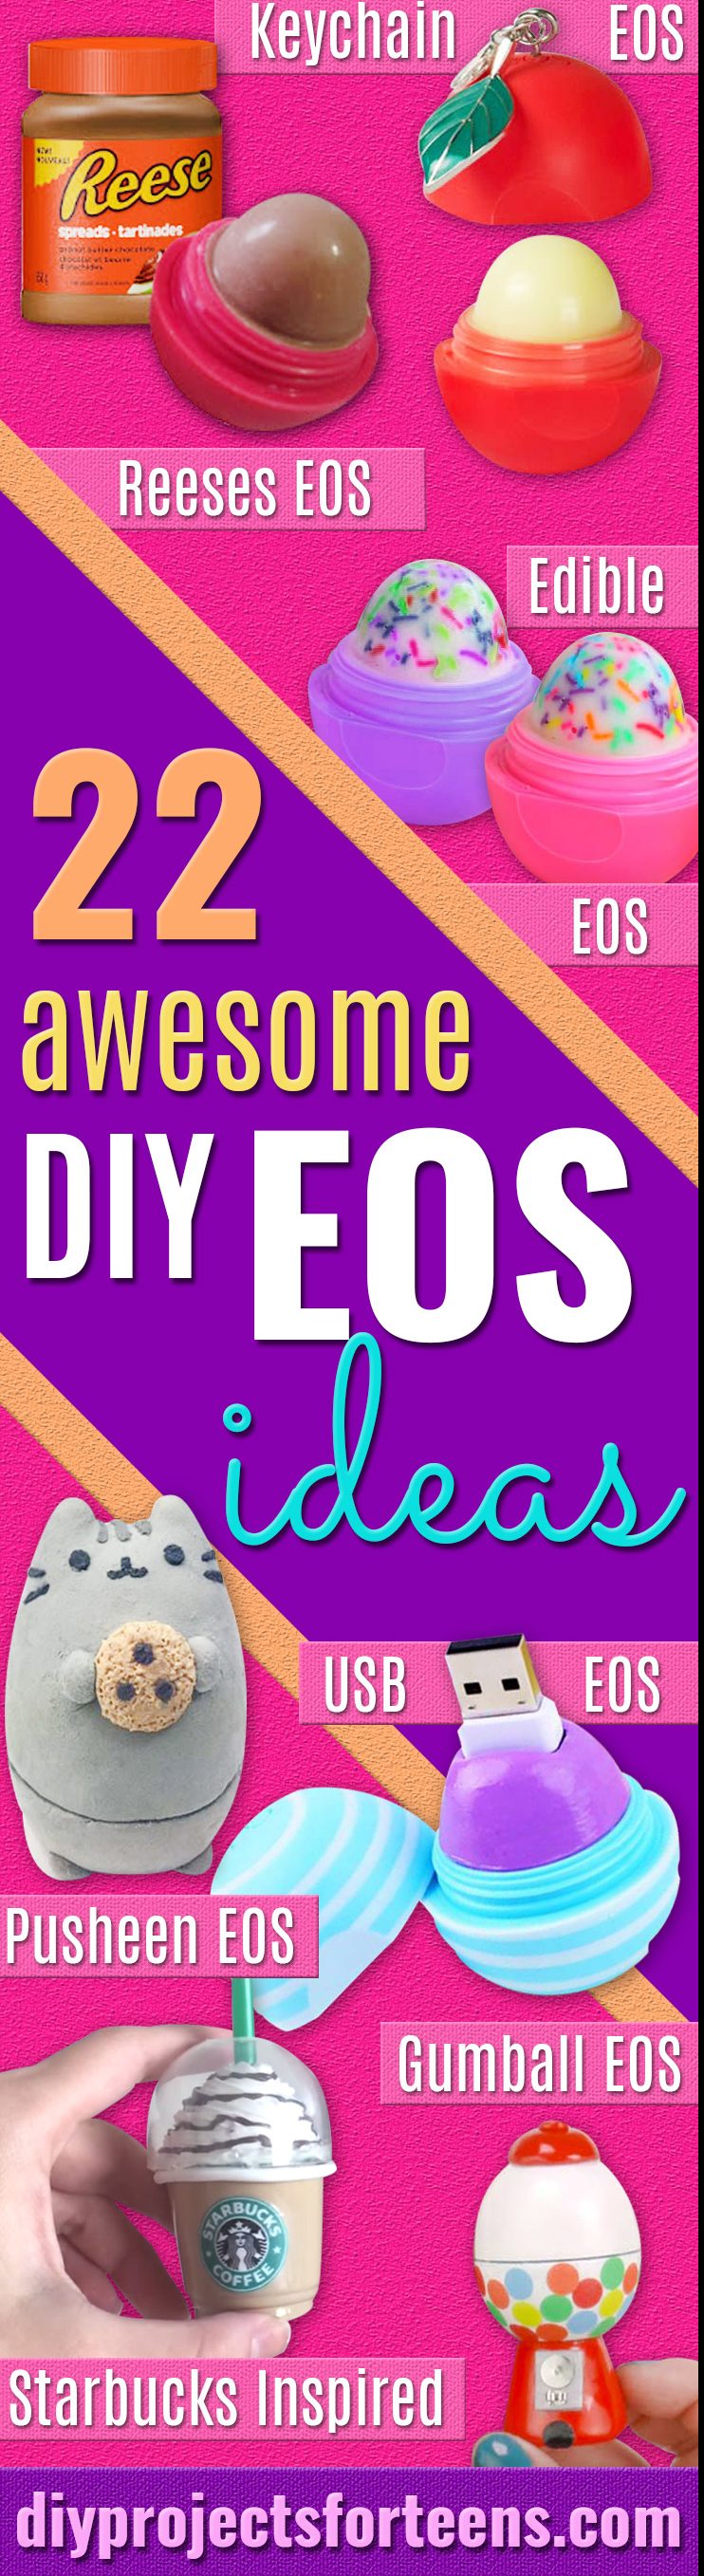 22 Most Awesome DIY EOS ideas